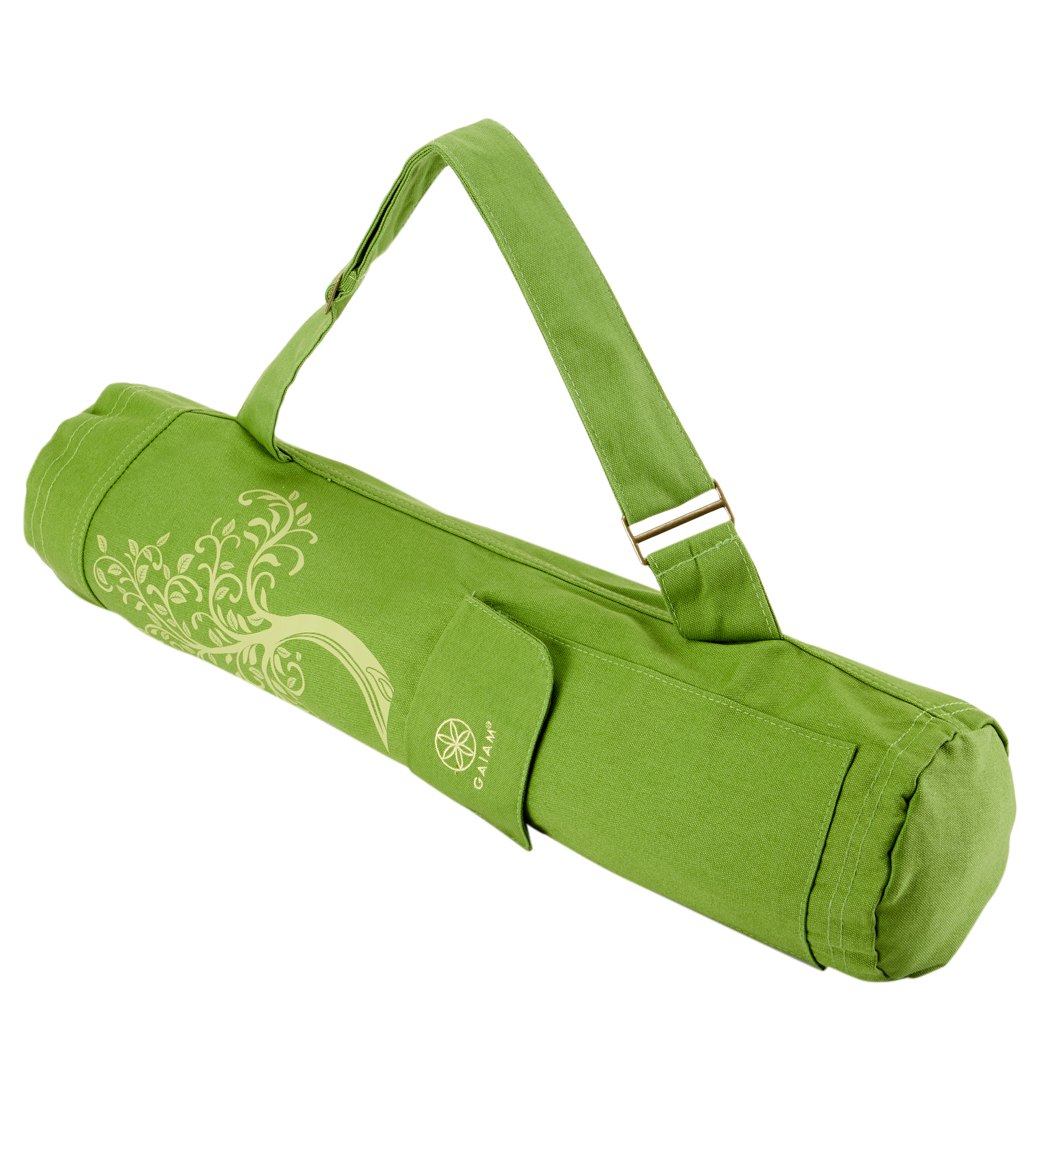 Gaiam Cargo Yoga Mat Bag, Tree of Wisdom